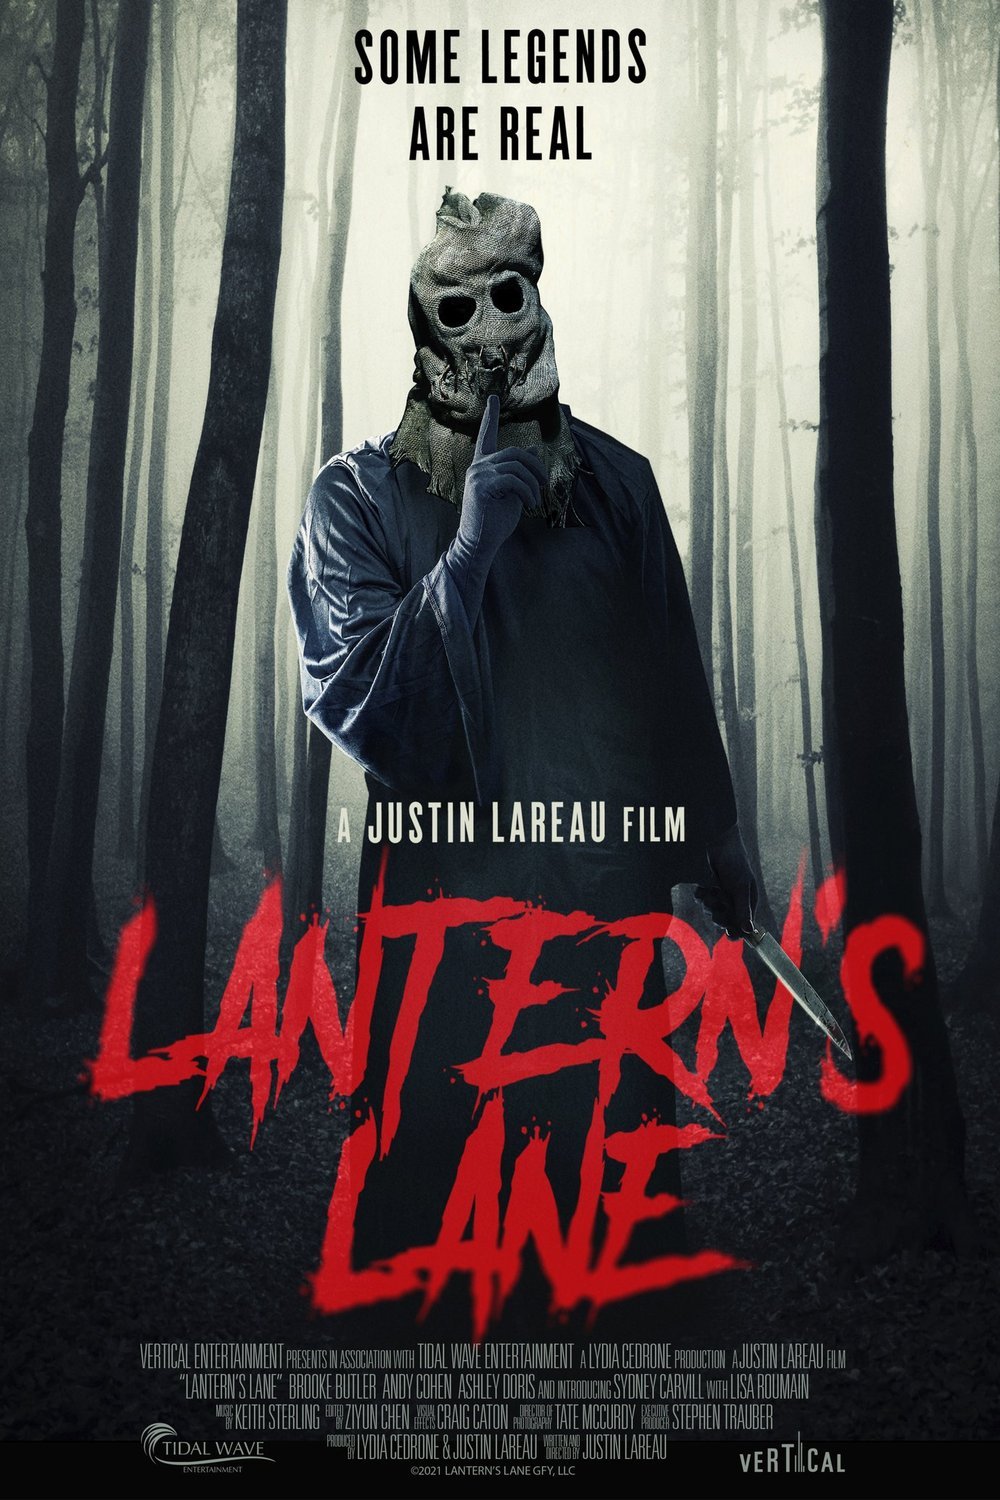 L'affiche du film Lantern's Lane